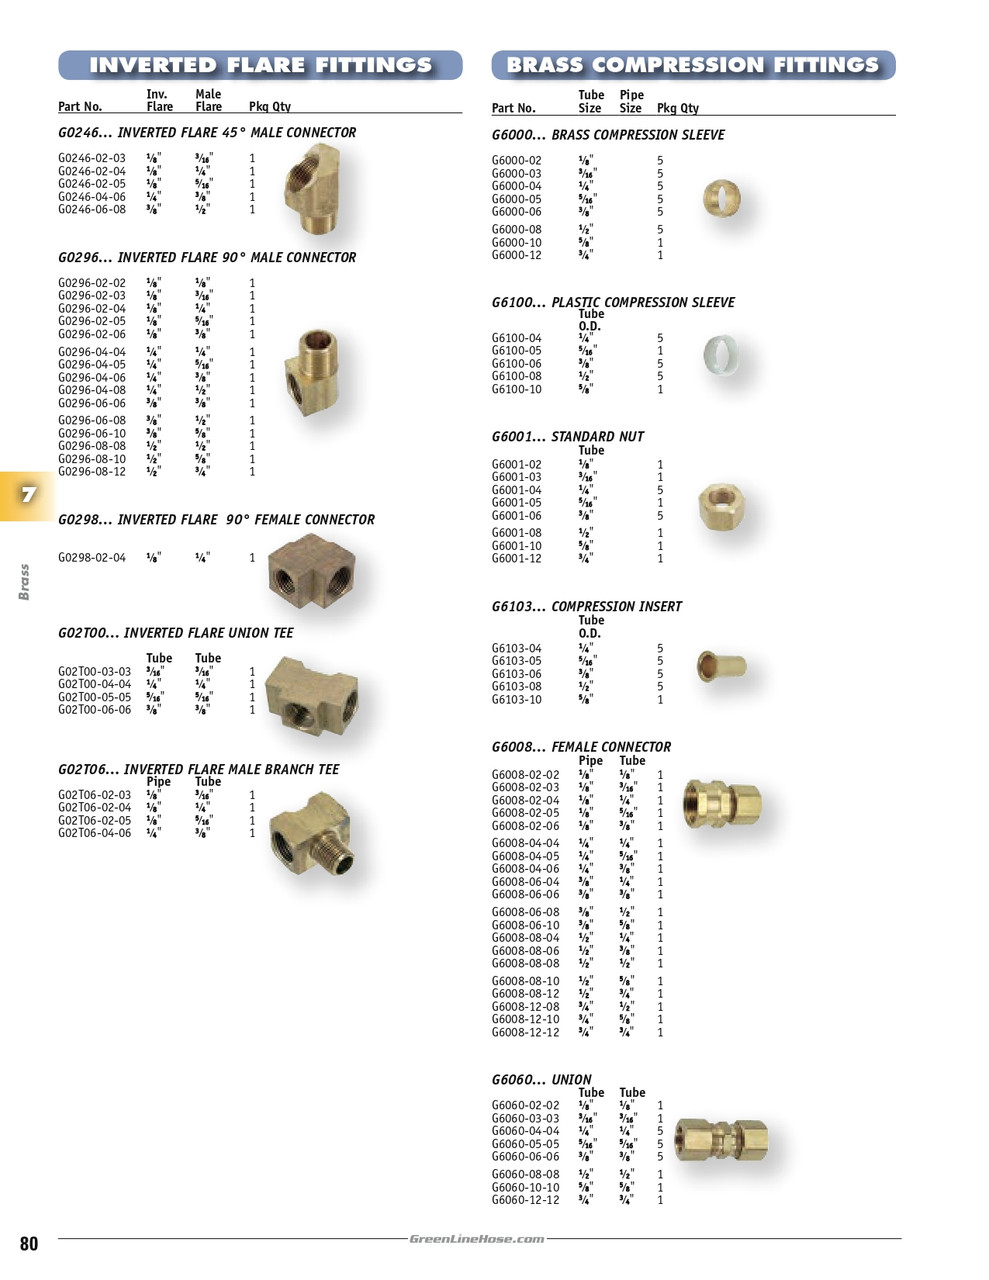 3/16" Brass Compression Nut   G6001-03